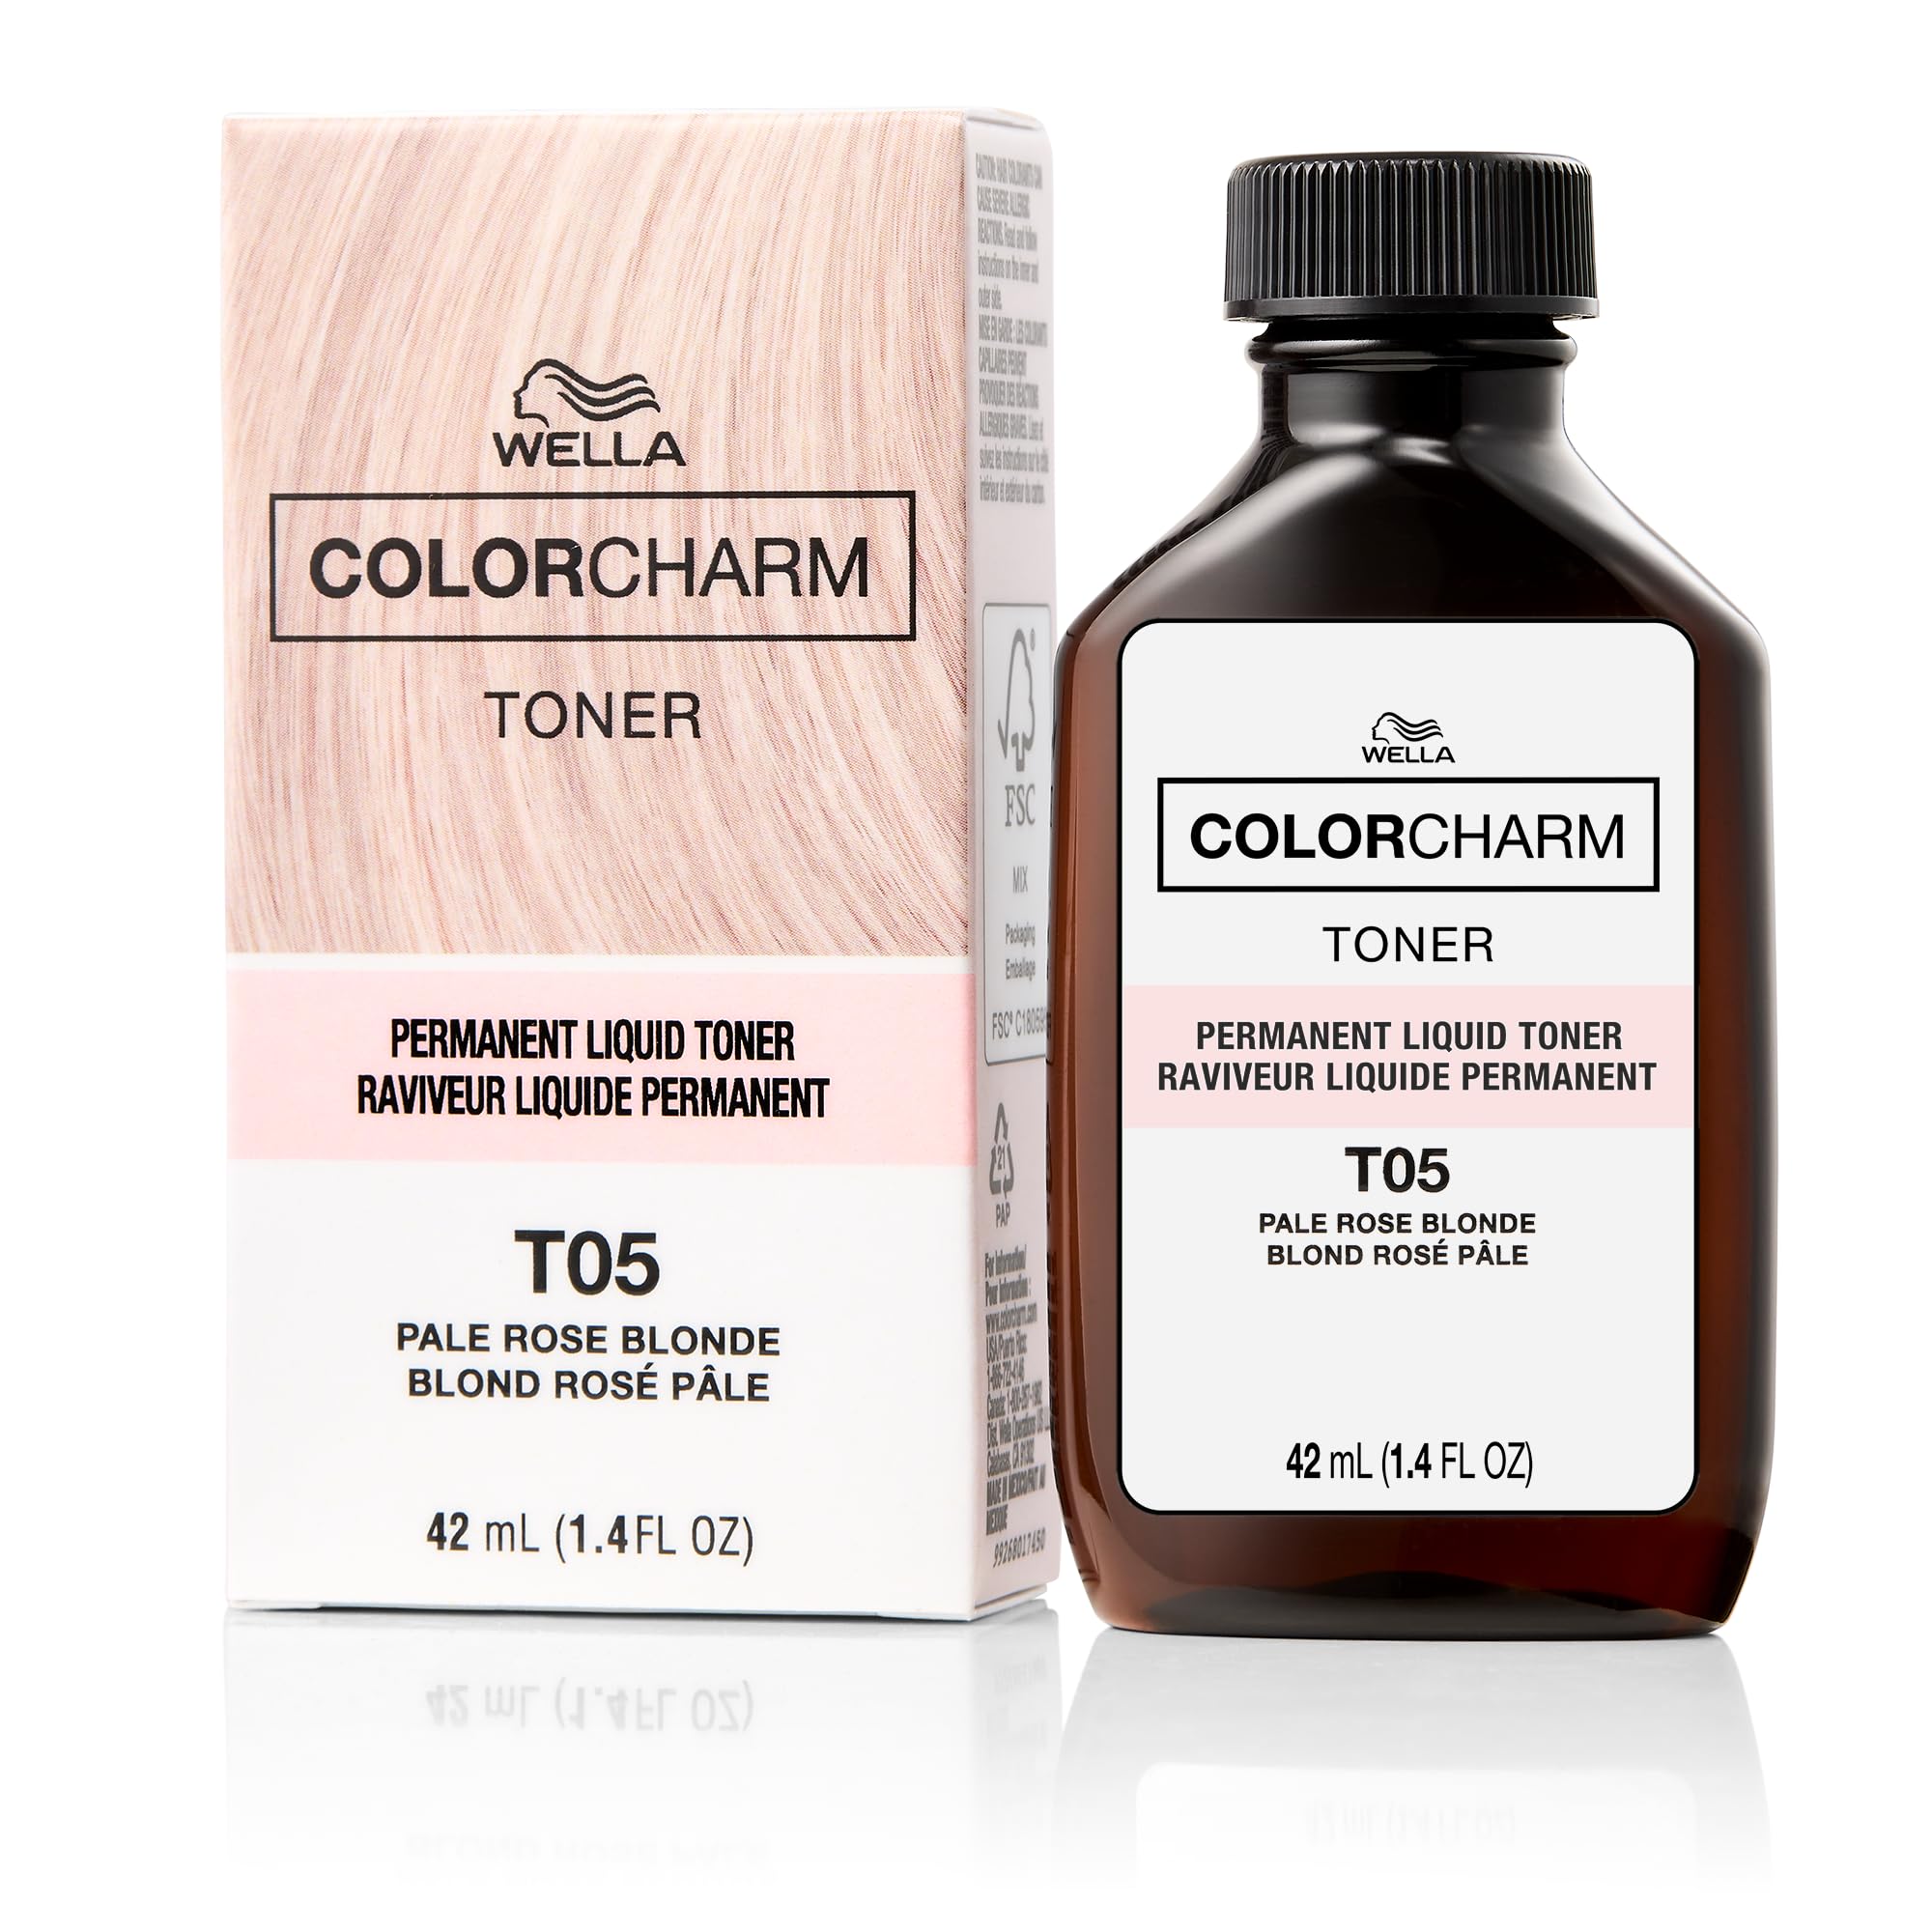 WELLA colorcharm Permanent Liquid Toners, Neutralize Brass, Free of Parabens, Vegan, T05 Pale Rose Blonde